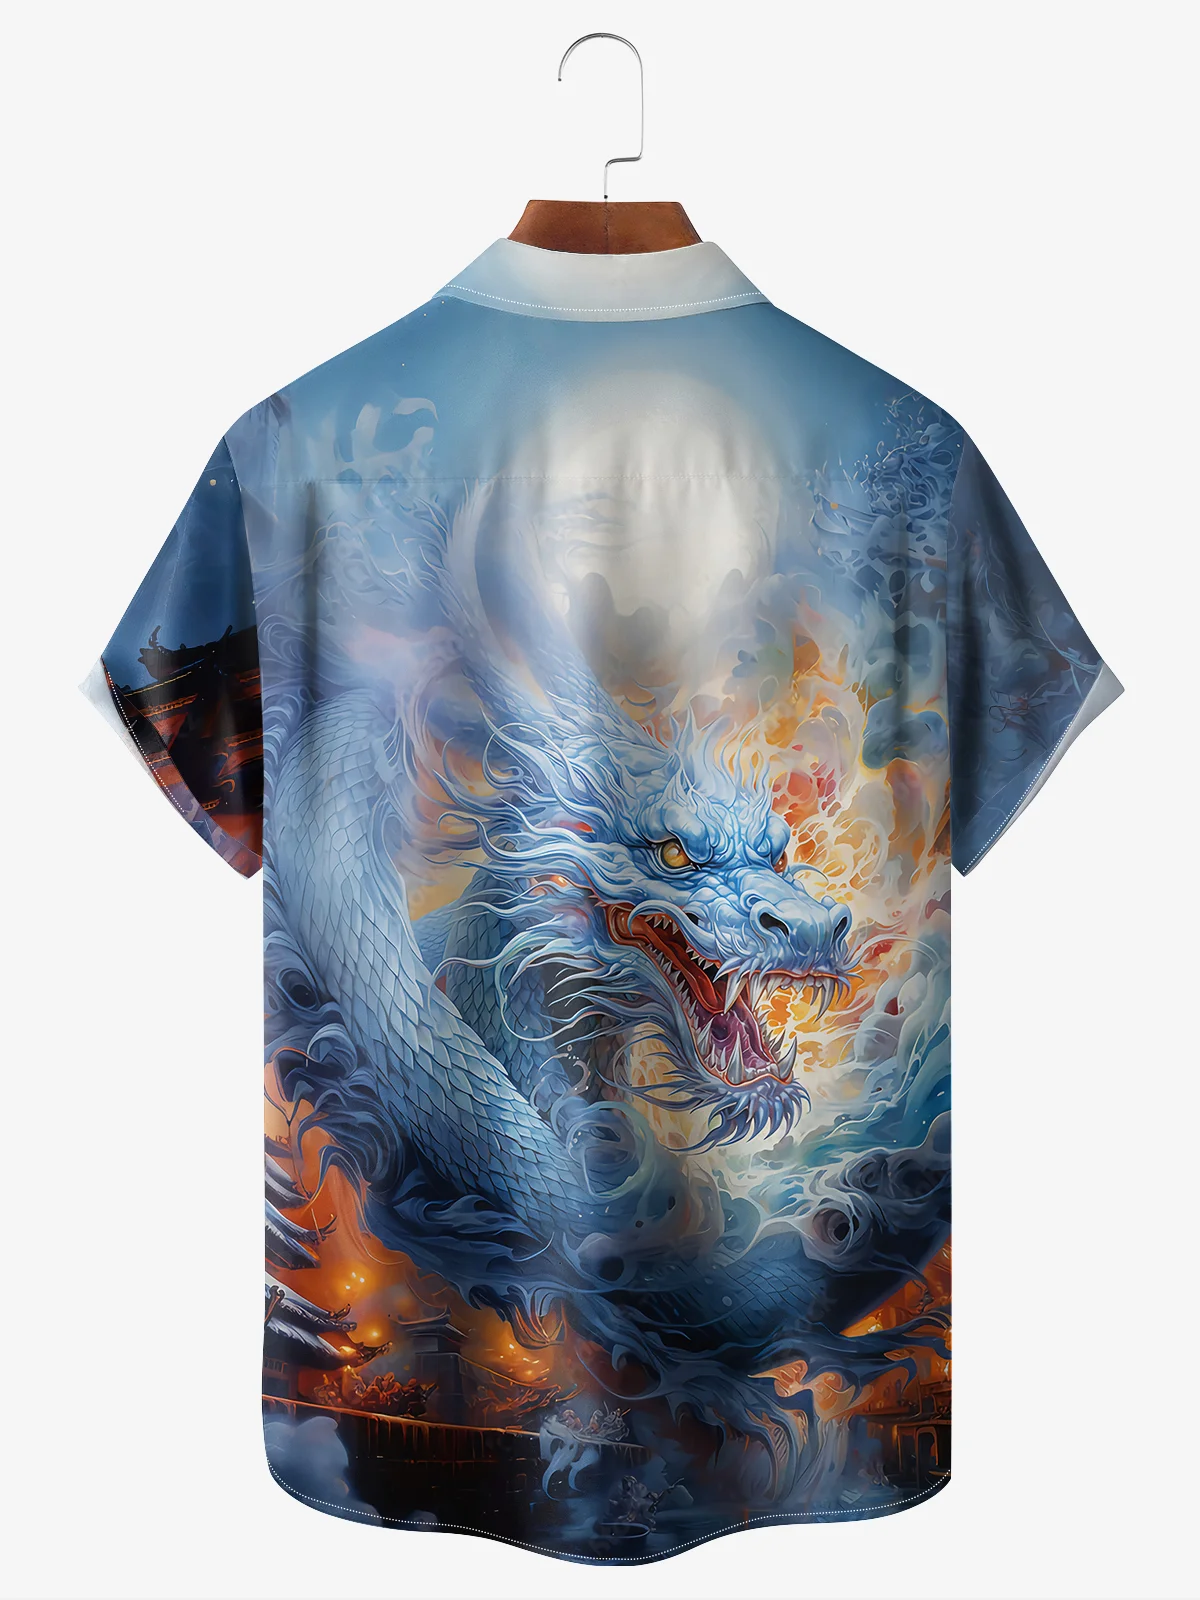 Hardaddy Moisture-wicking Dragon Chest Pocket Casual Shirt